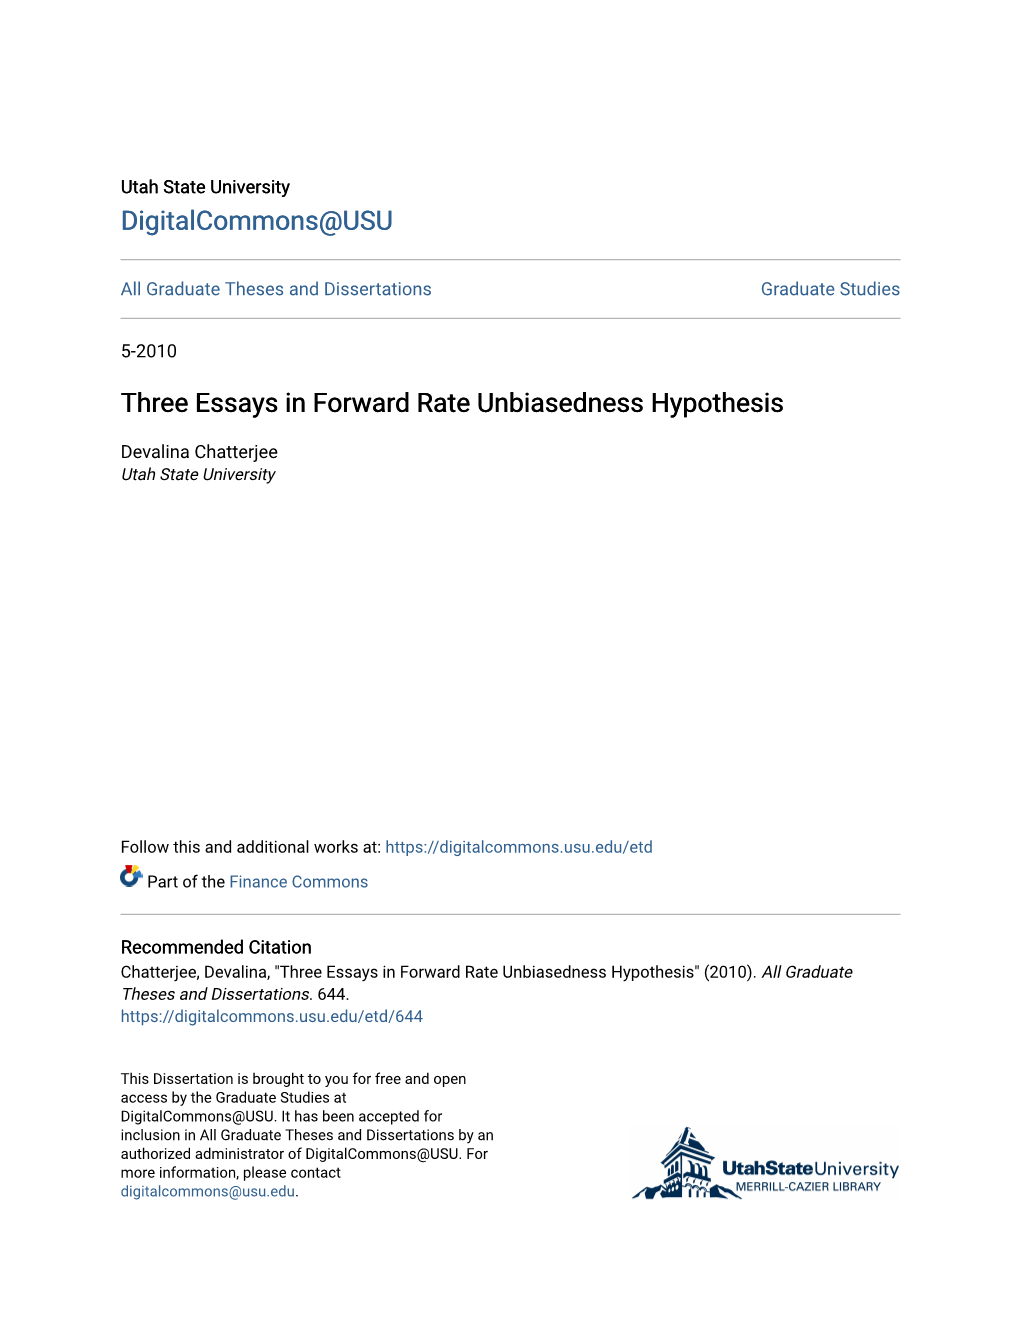 Three Essays in Forward Rate Unbiasedness Hypothesis